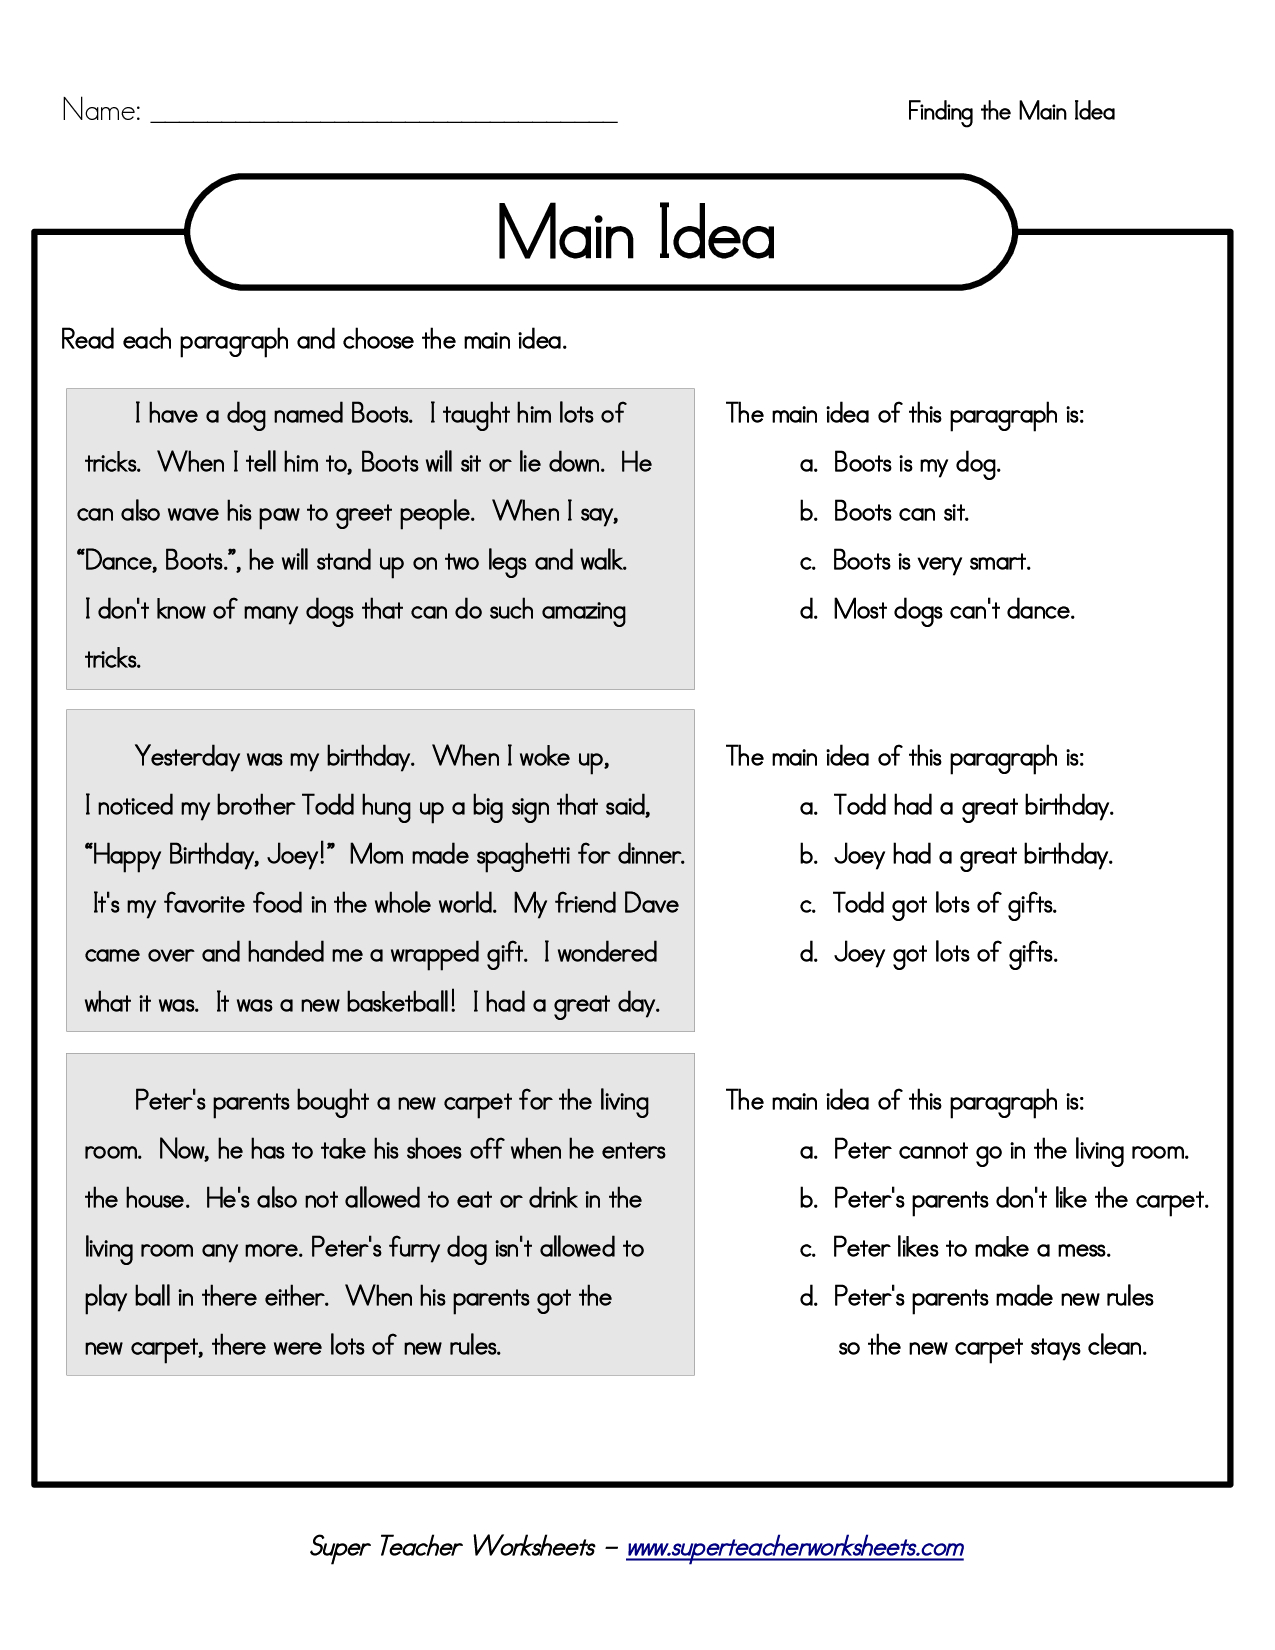 10 Perfect Main Idea Activities High School sample 3rd grade paragraph finding the main idea main idea 25 2024